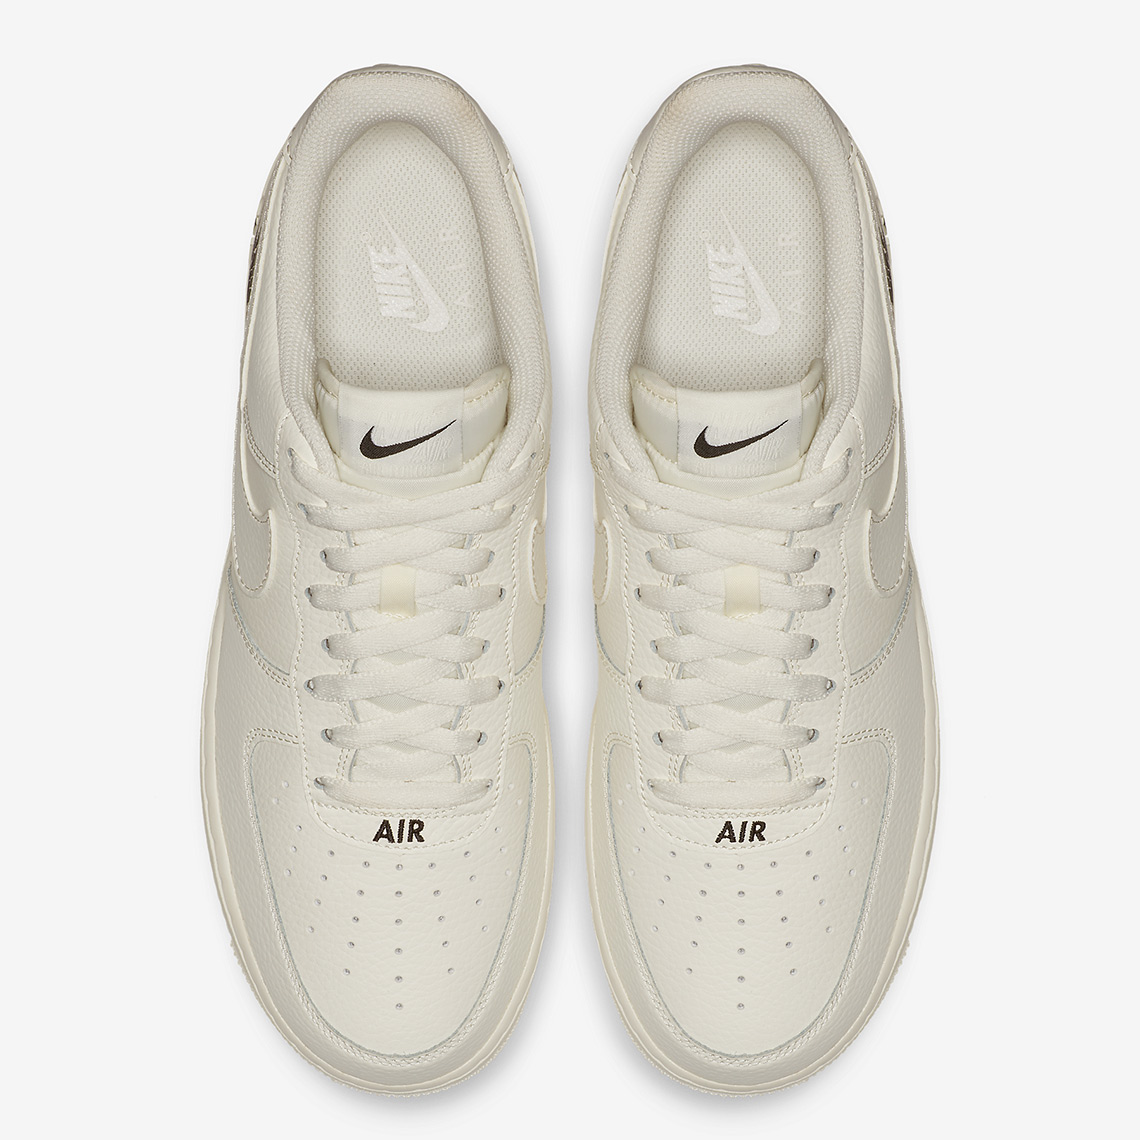 Nike Air Force 1 Low AJ7280-102 + AJ7280-600 Release Info | SneakerNews.com